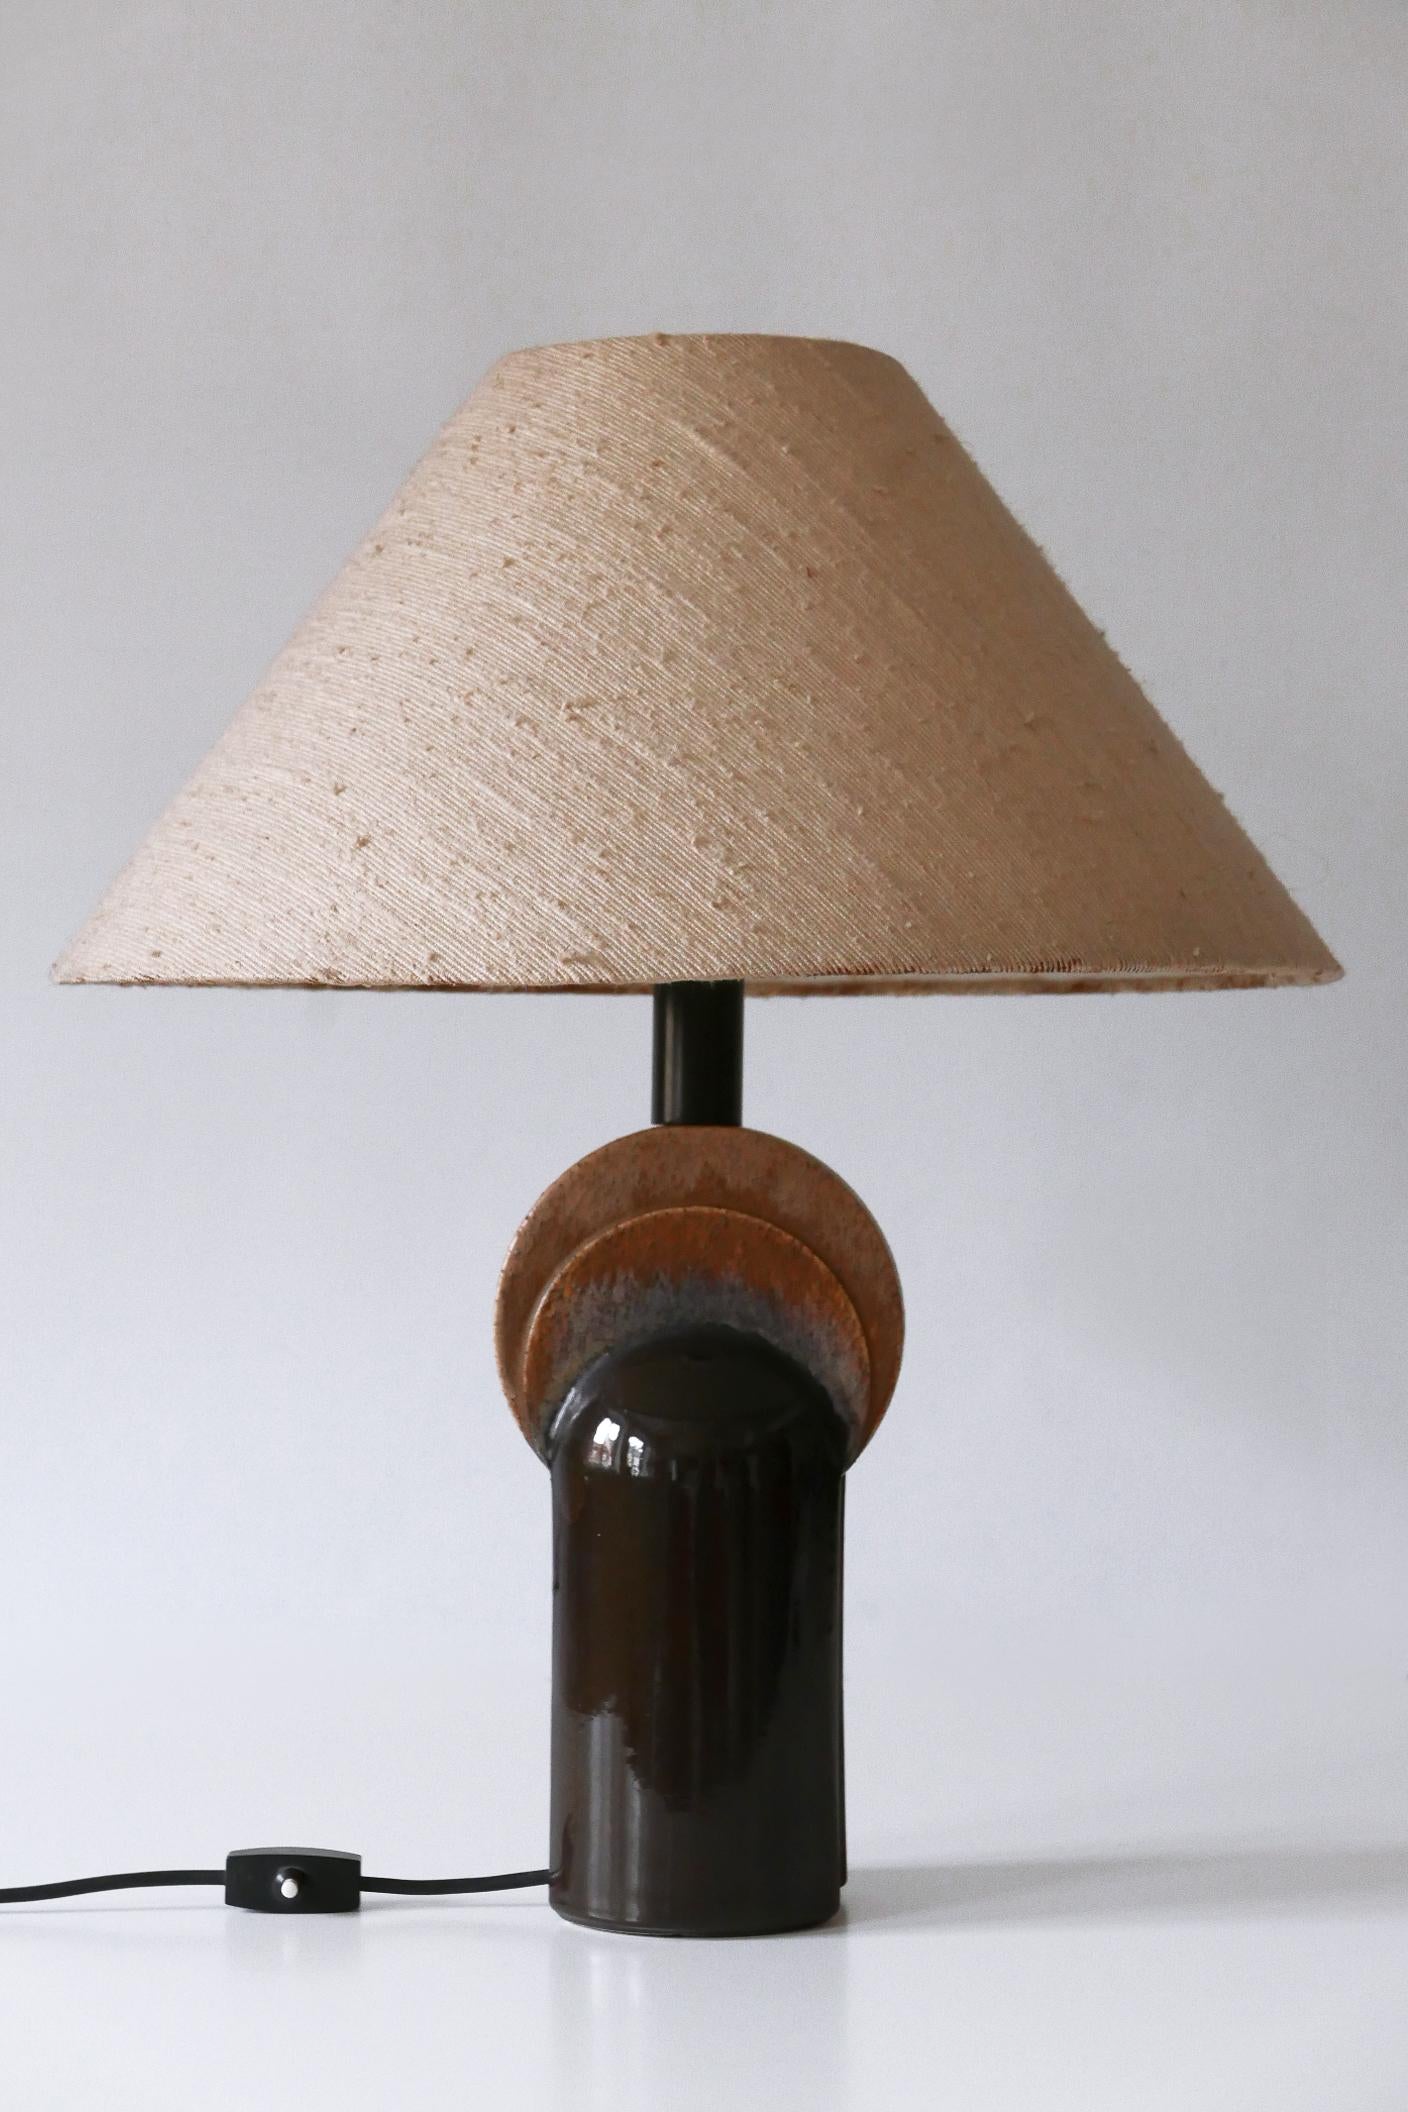 Elegant Mid-Century Modern Ceramic Table Lamp by Leola Design Germany 1960s For Sale 7